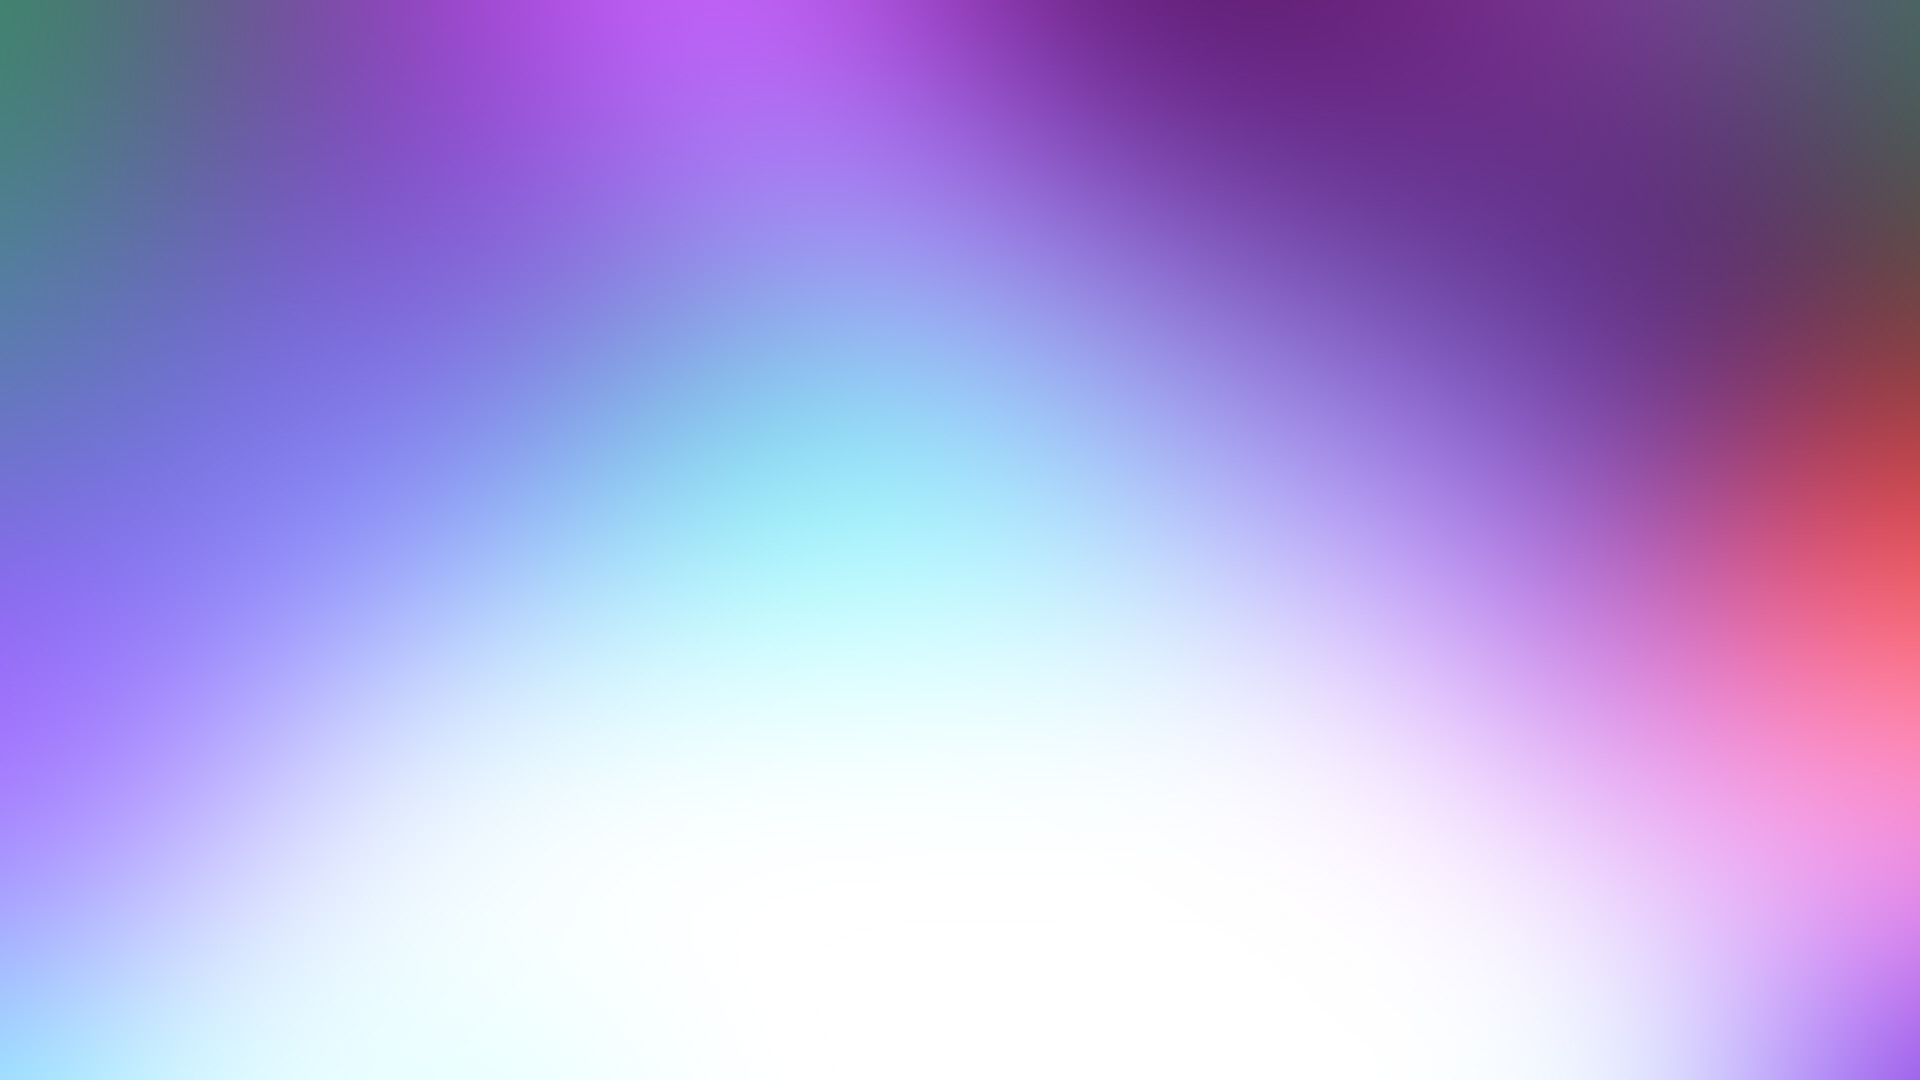 Wallpaper Purple Blue White Spot Full HD 1080p